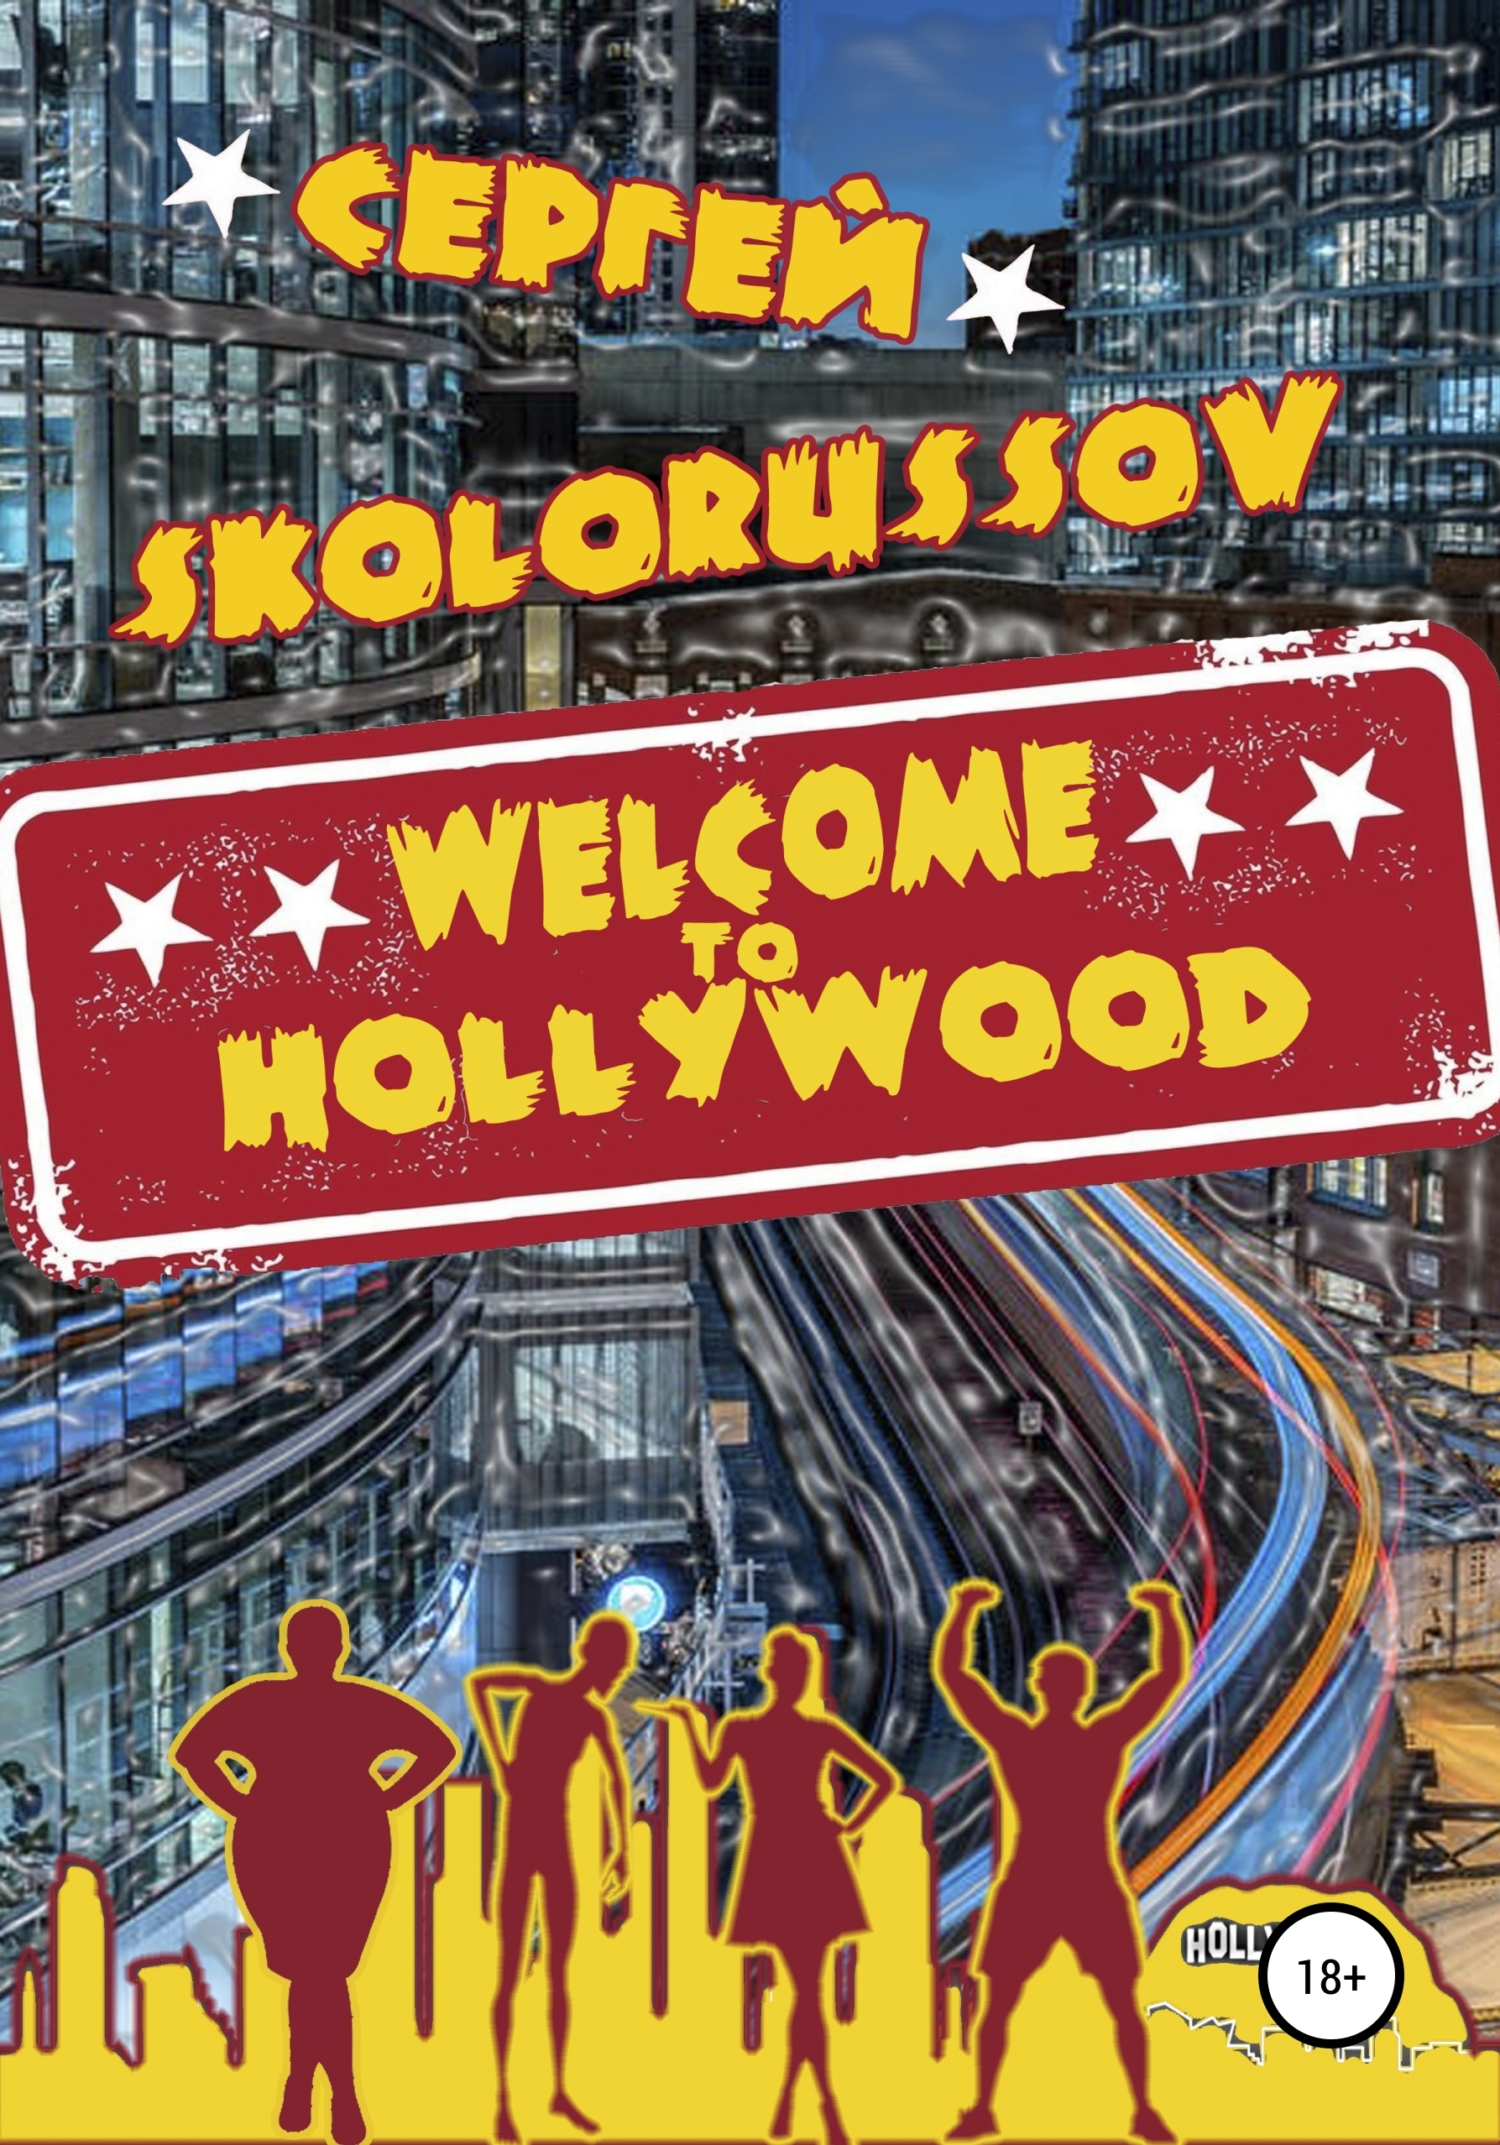 Welcome to Hollywood - Сергей Skolorussov